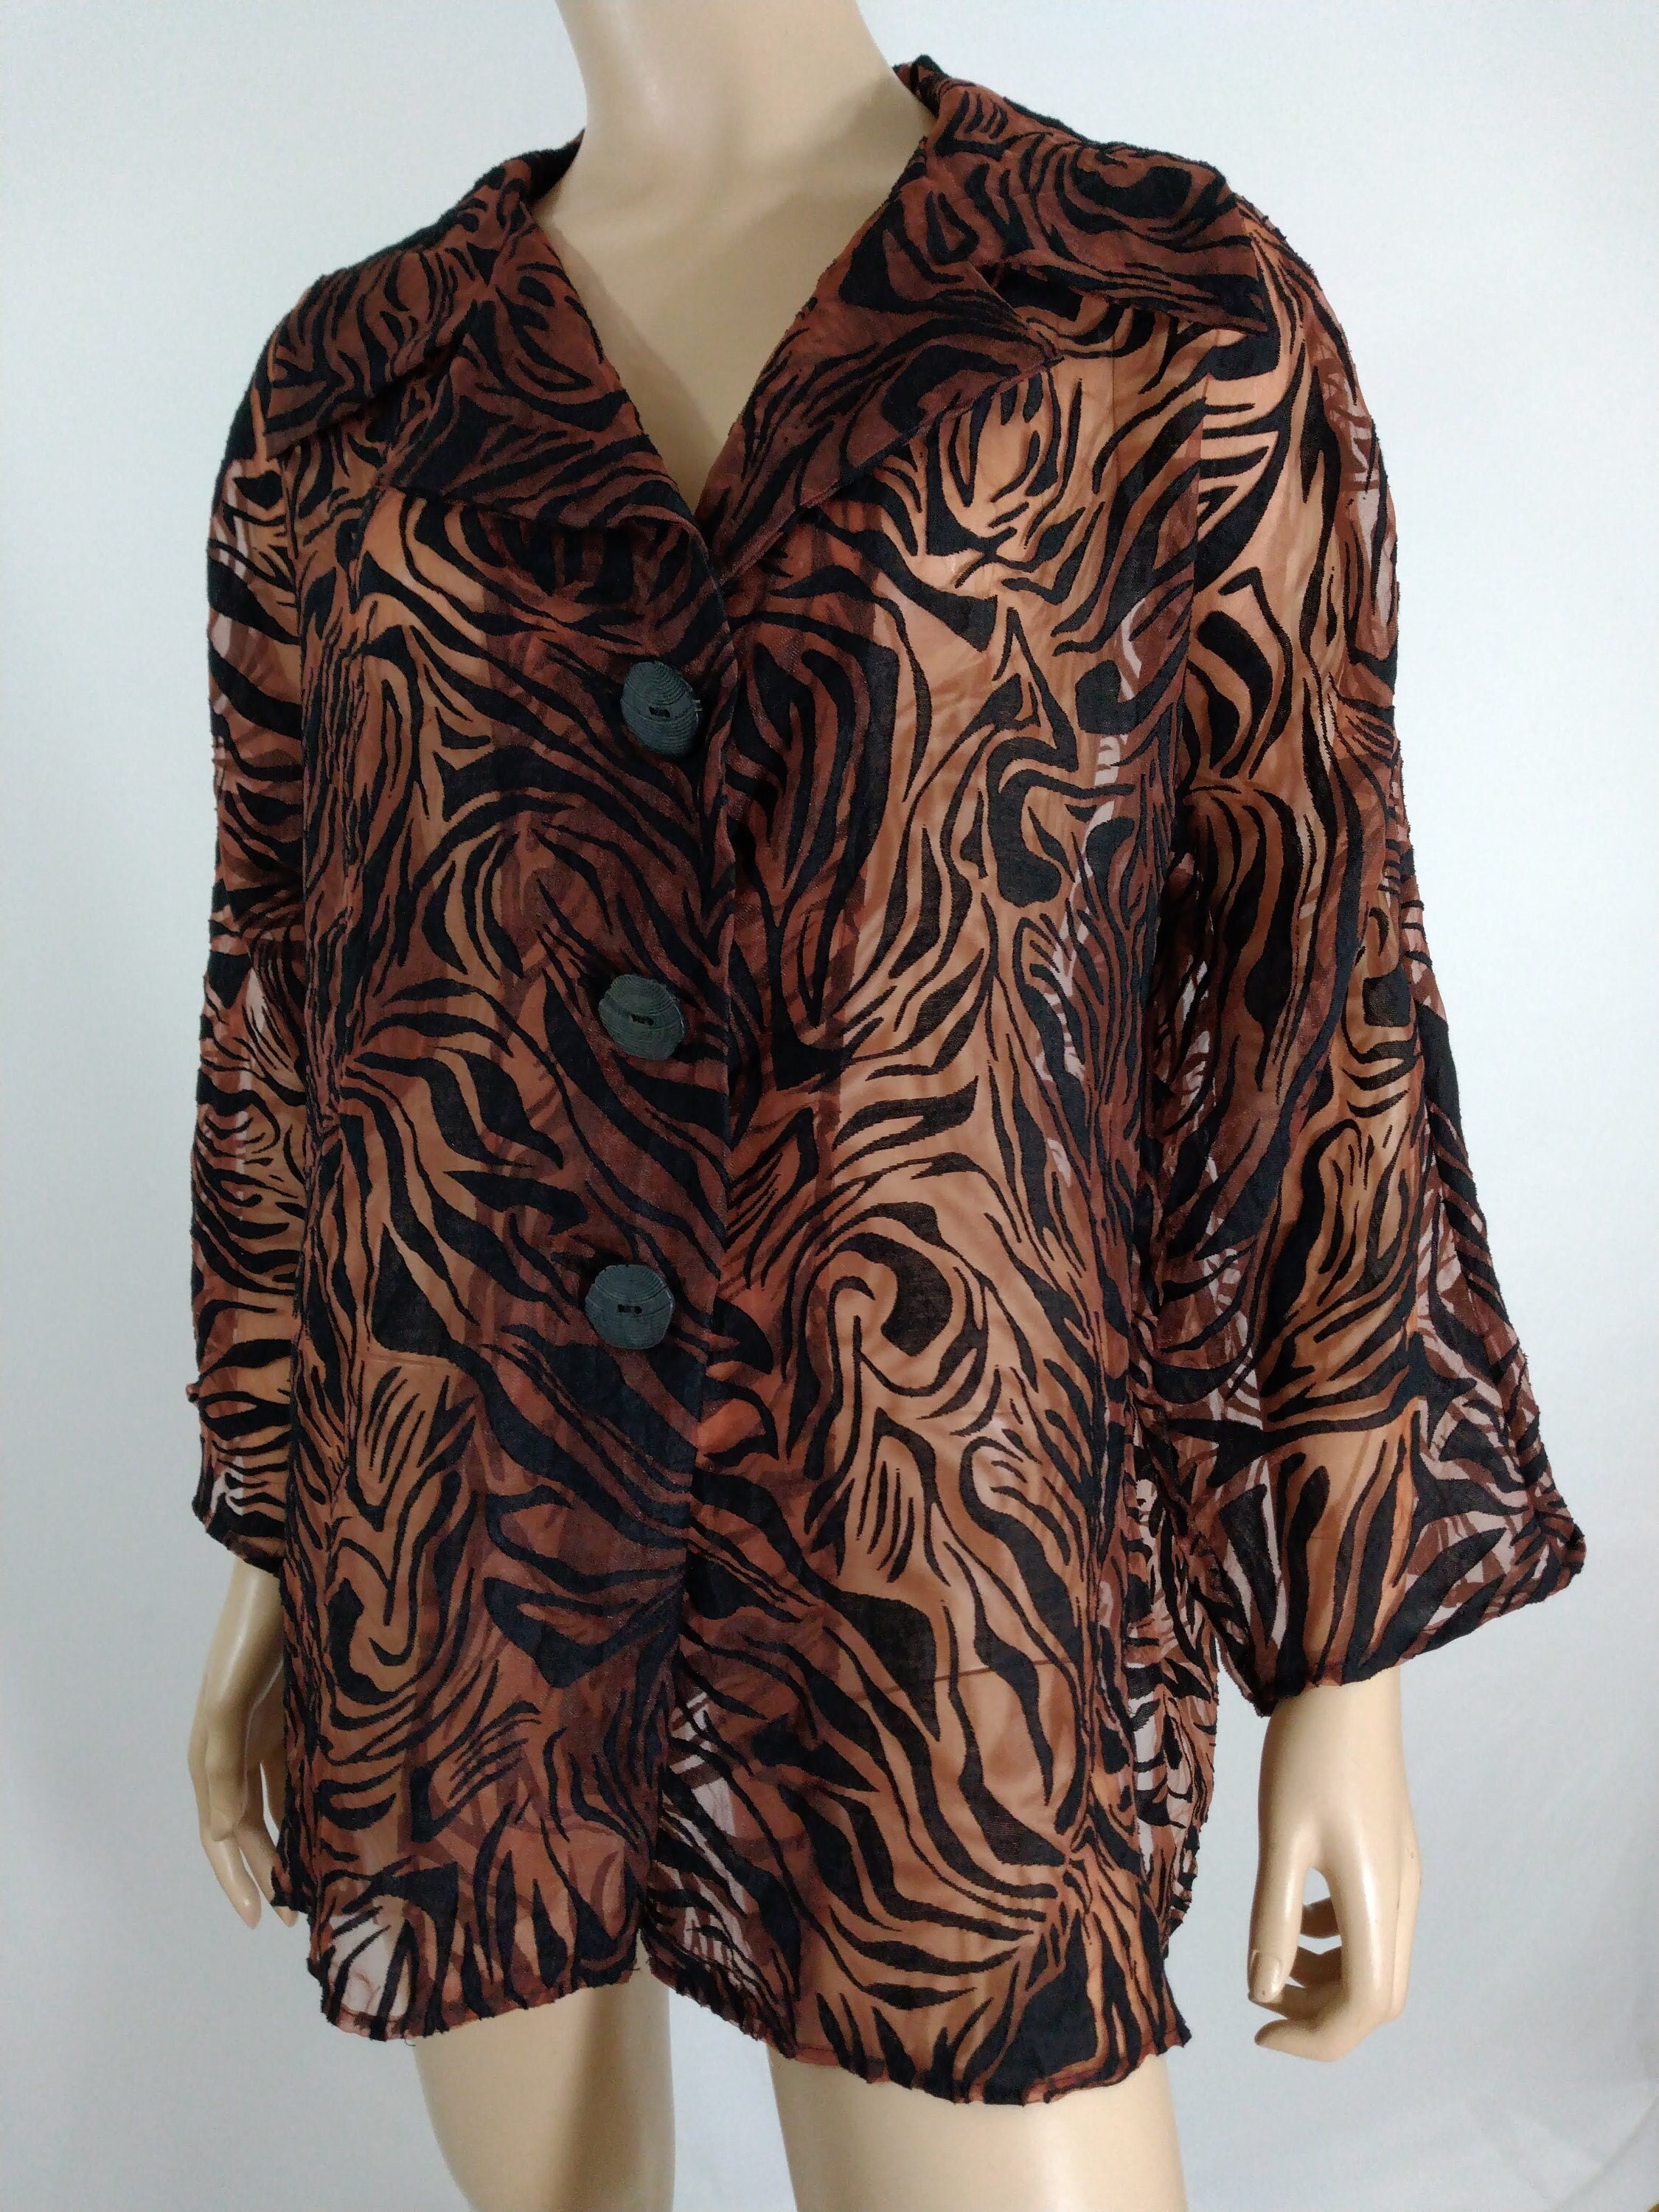 Shiraleah Lelo Leopard Print Robe, Grey S/M